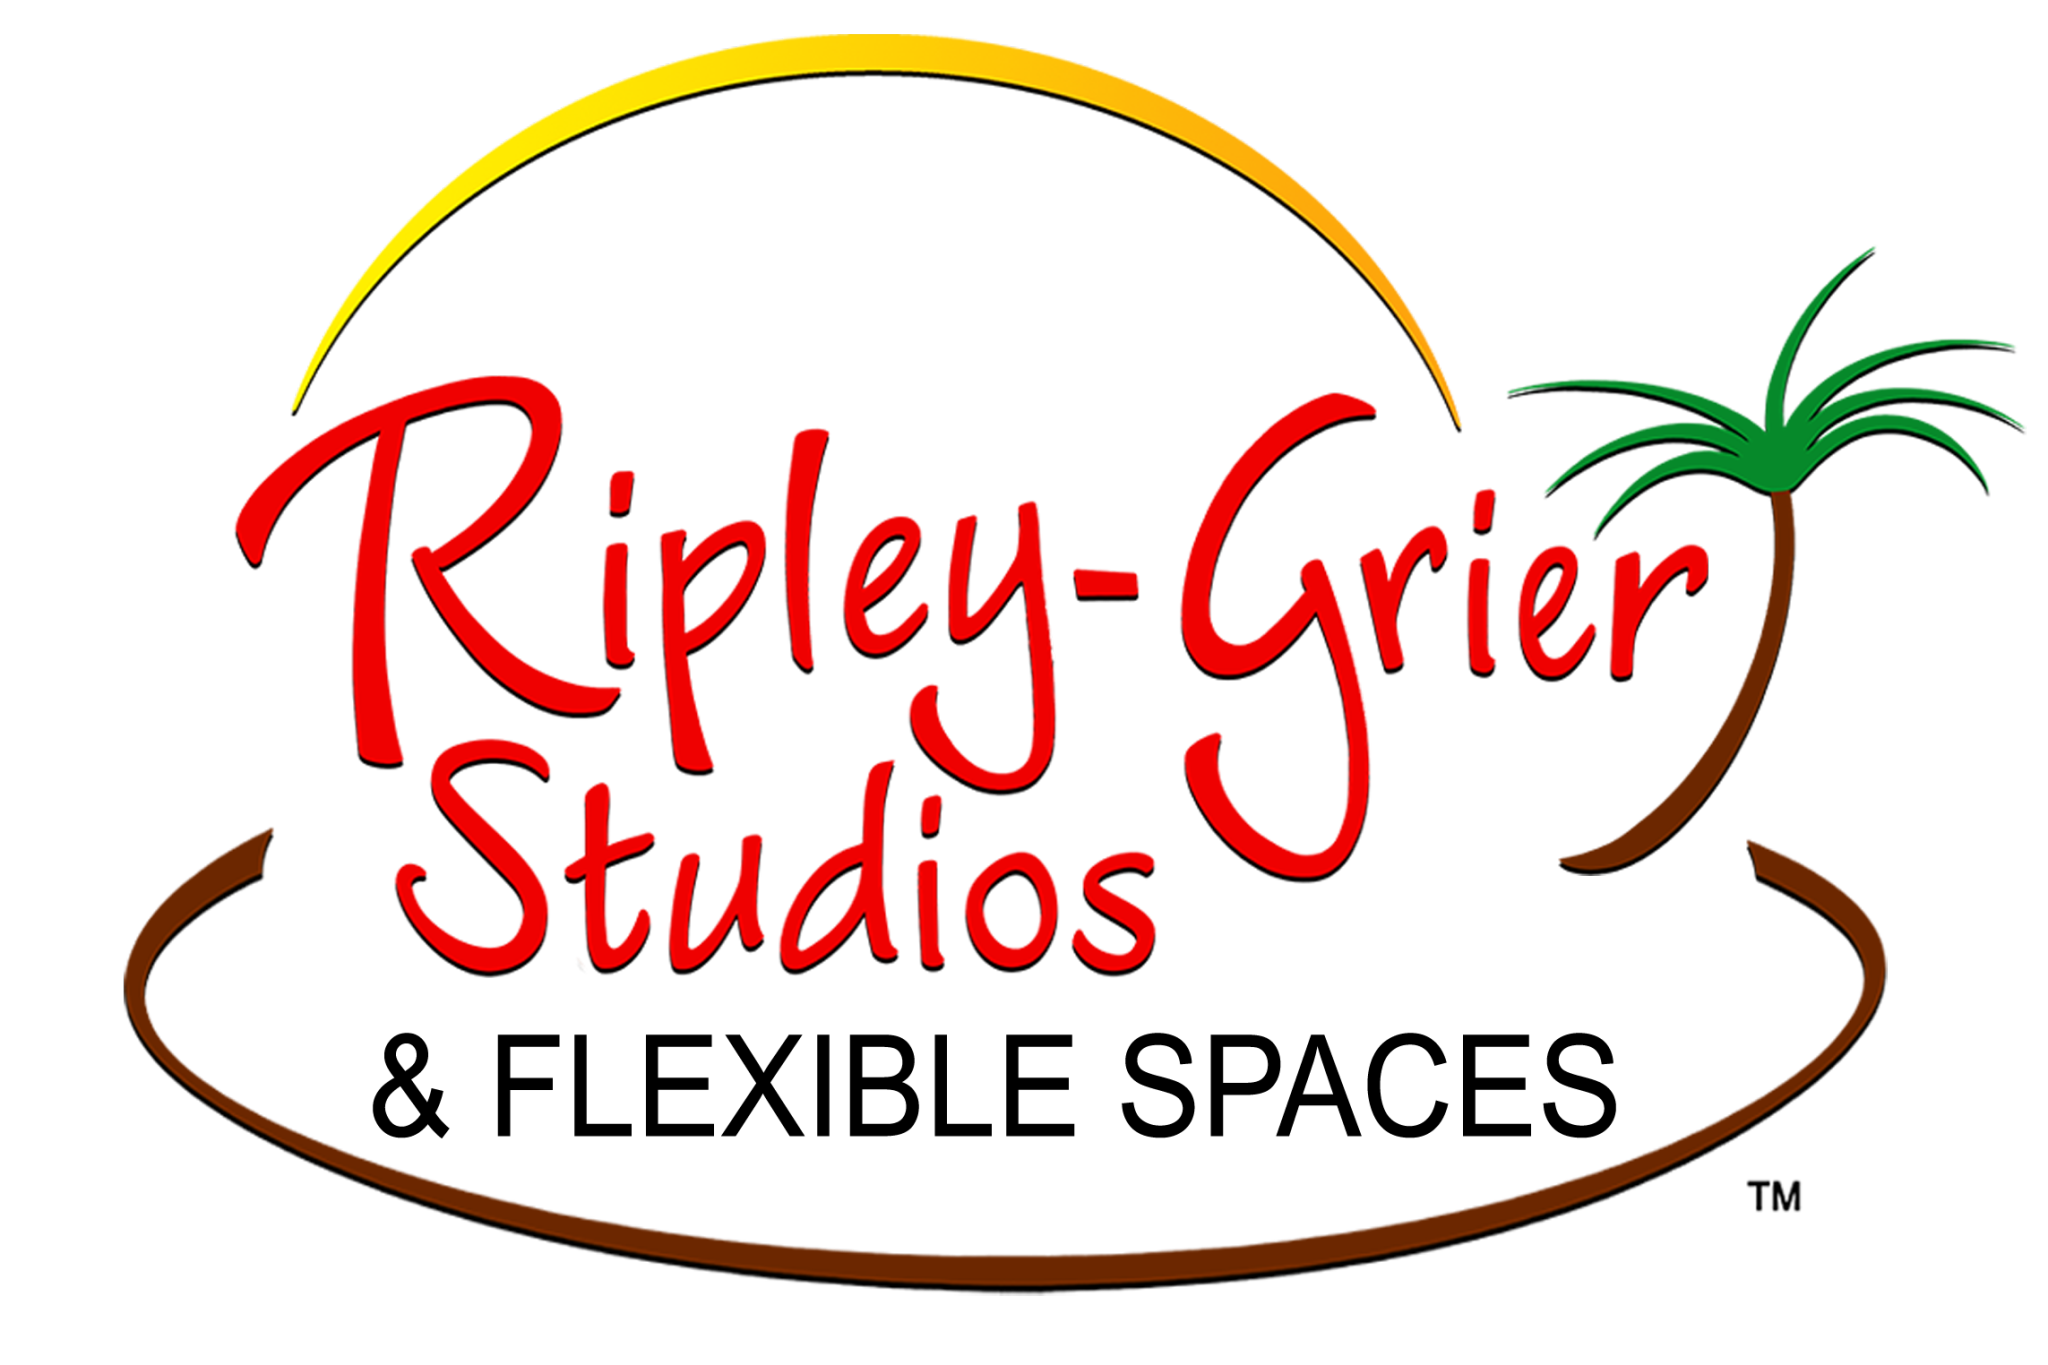 Ripley-Grier Studios